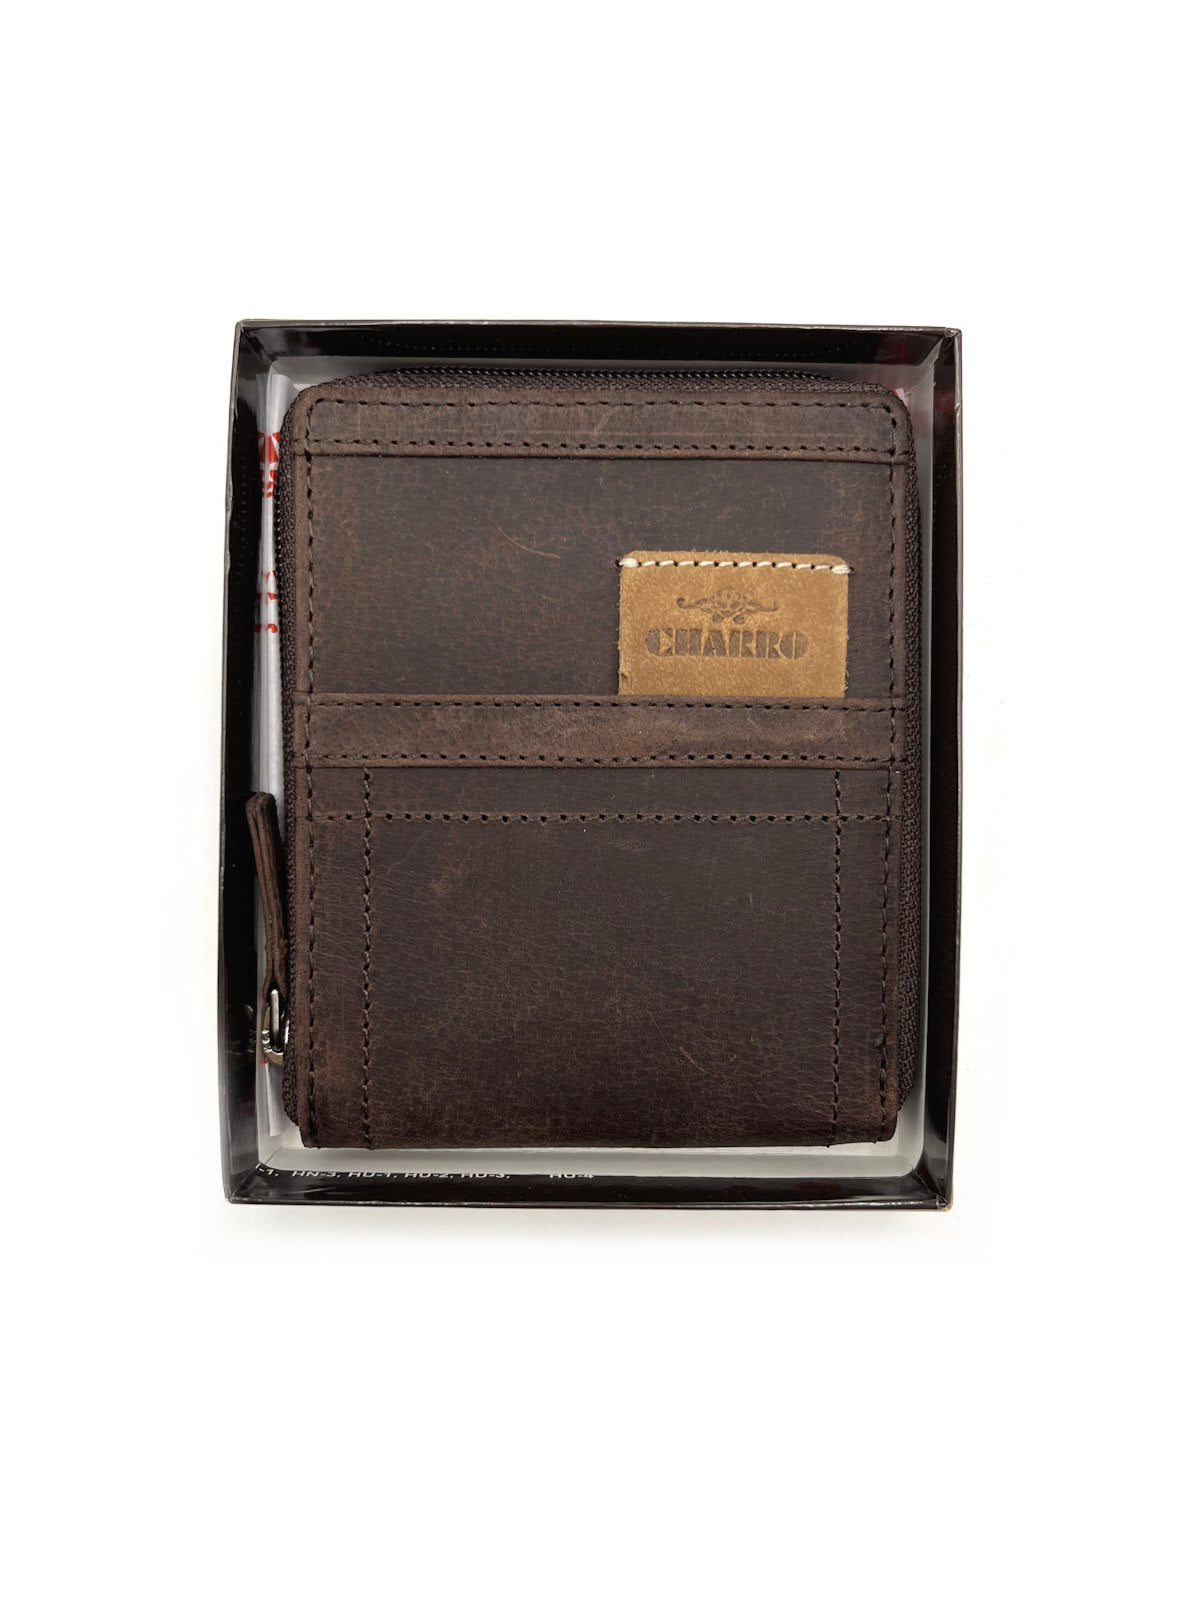 Genuine leather wallet, Brand Charro, vintage effect, art. HU-31556